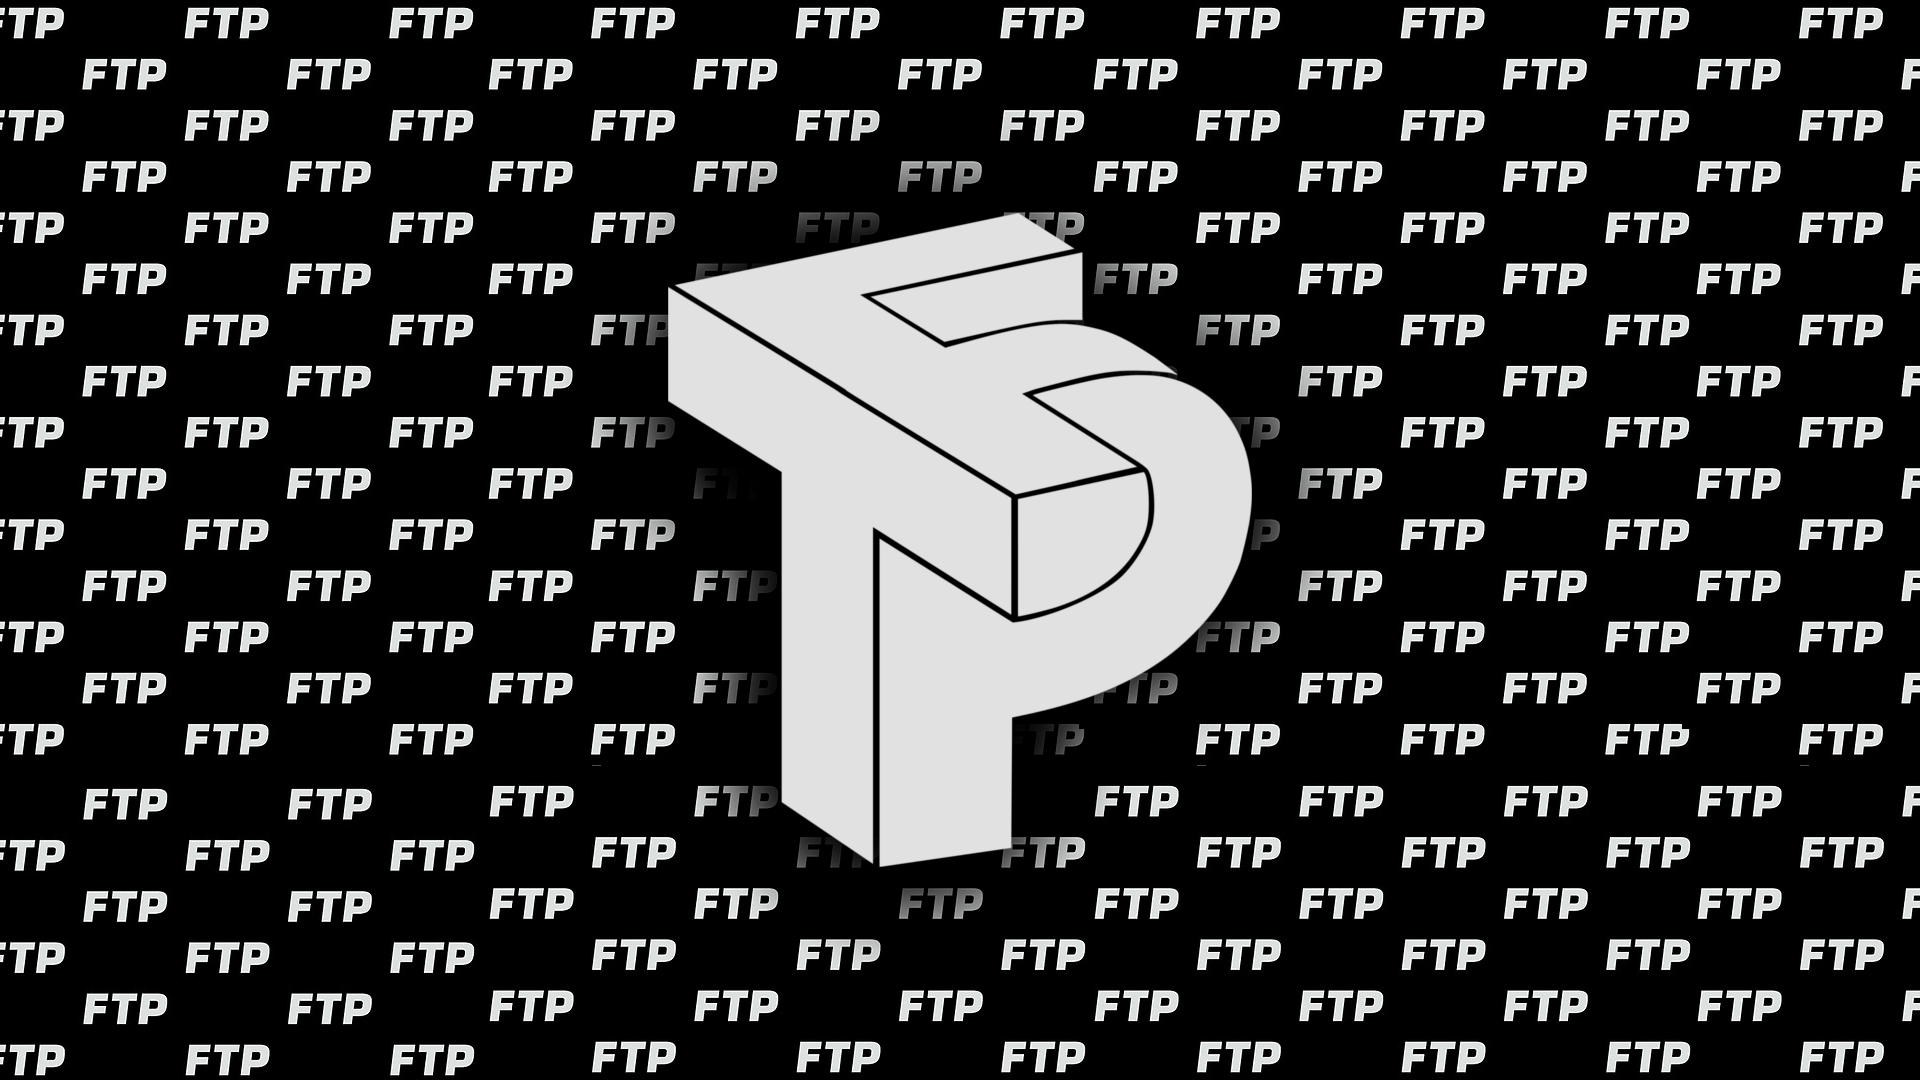 WallpaperDesktop walls of the new FTP logo